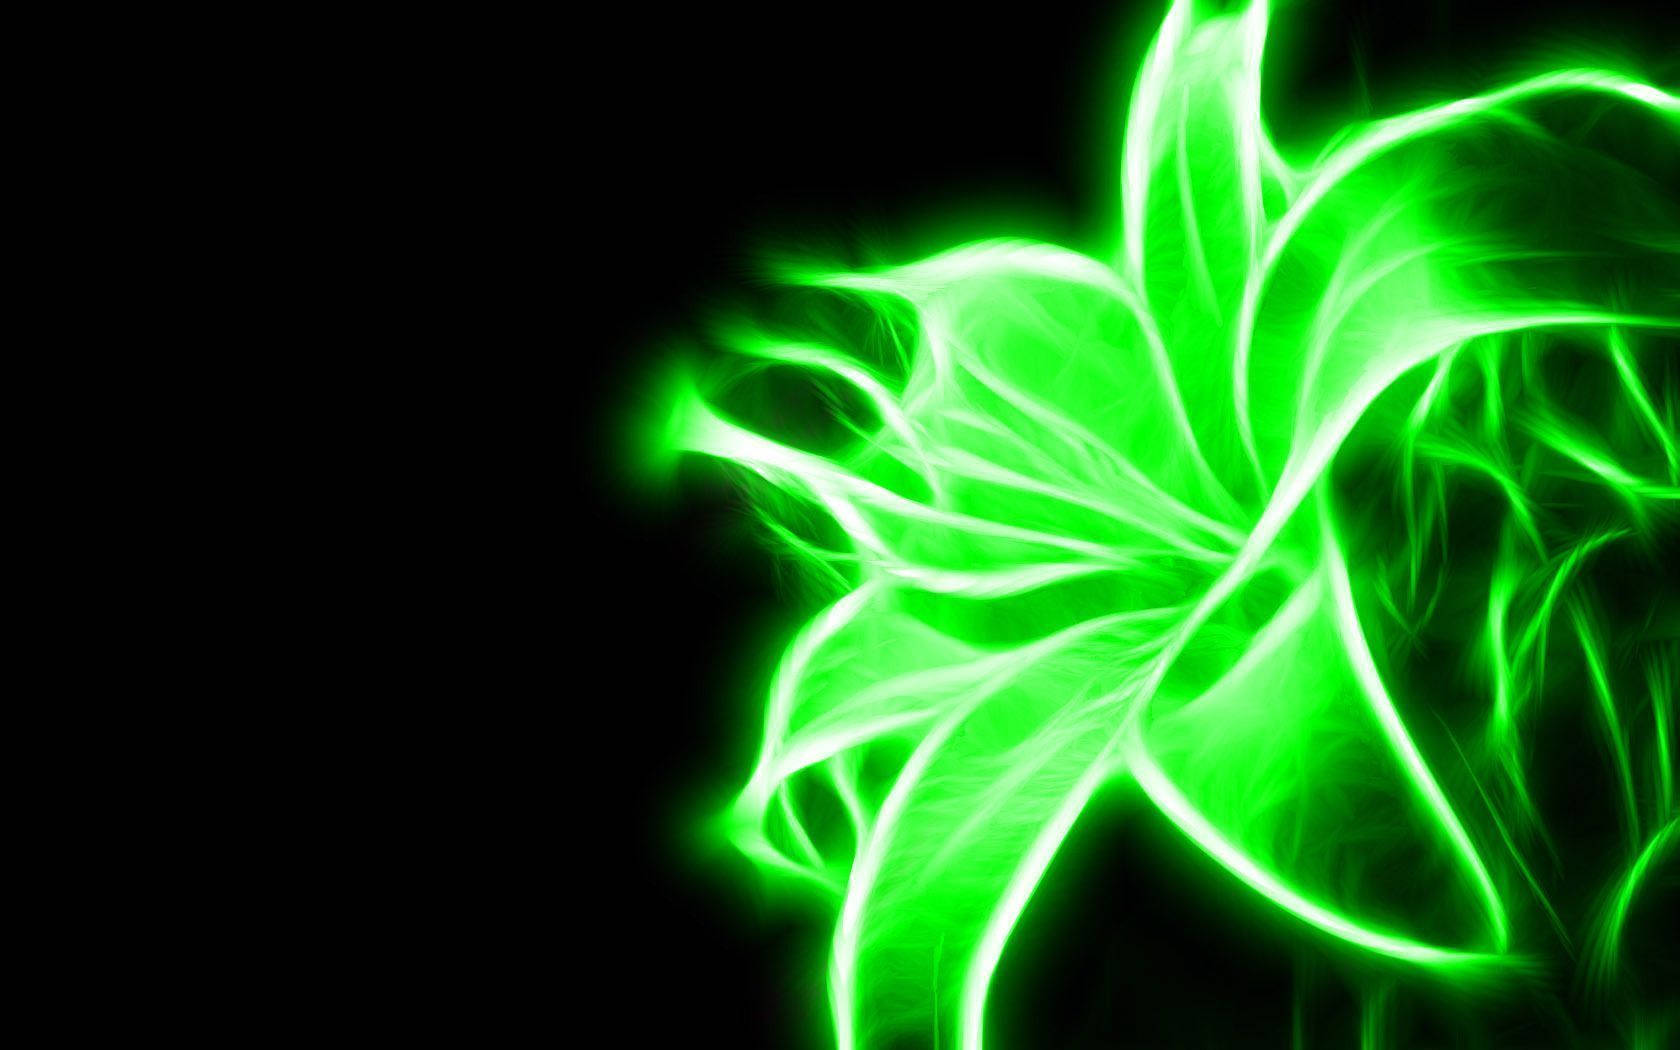 Flower-shaped Green Fire Background